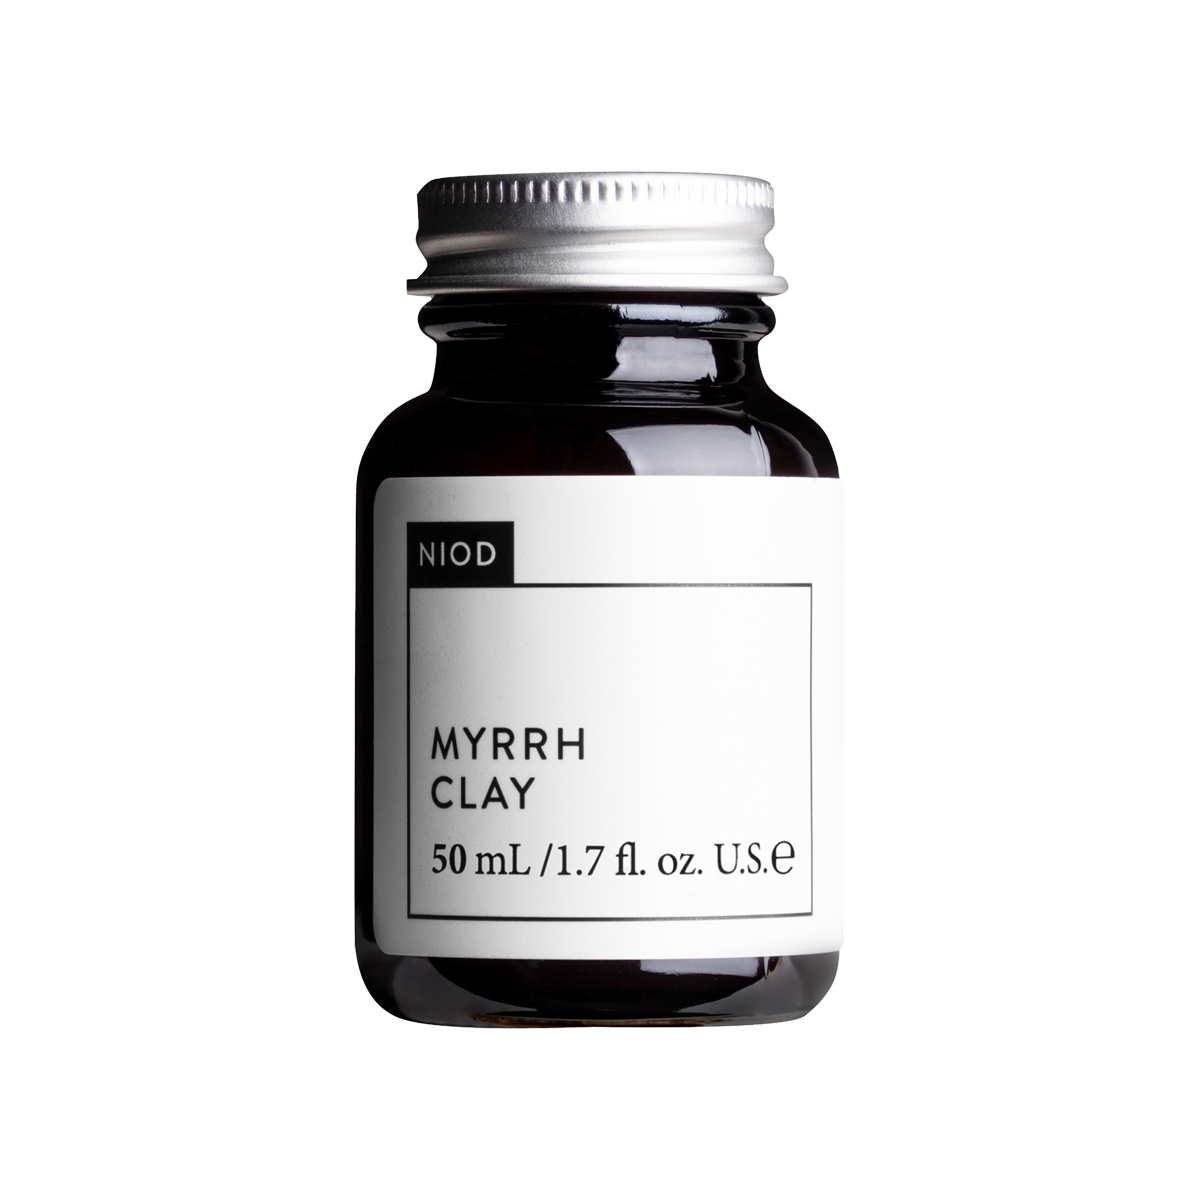 NIOD - Myrrh Clay Mask